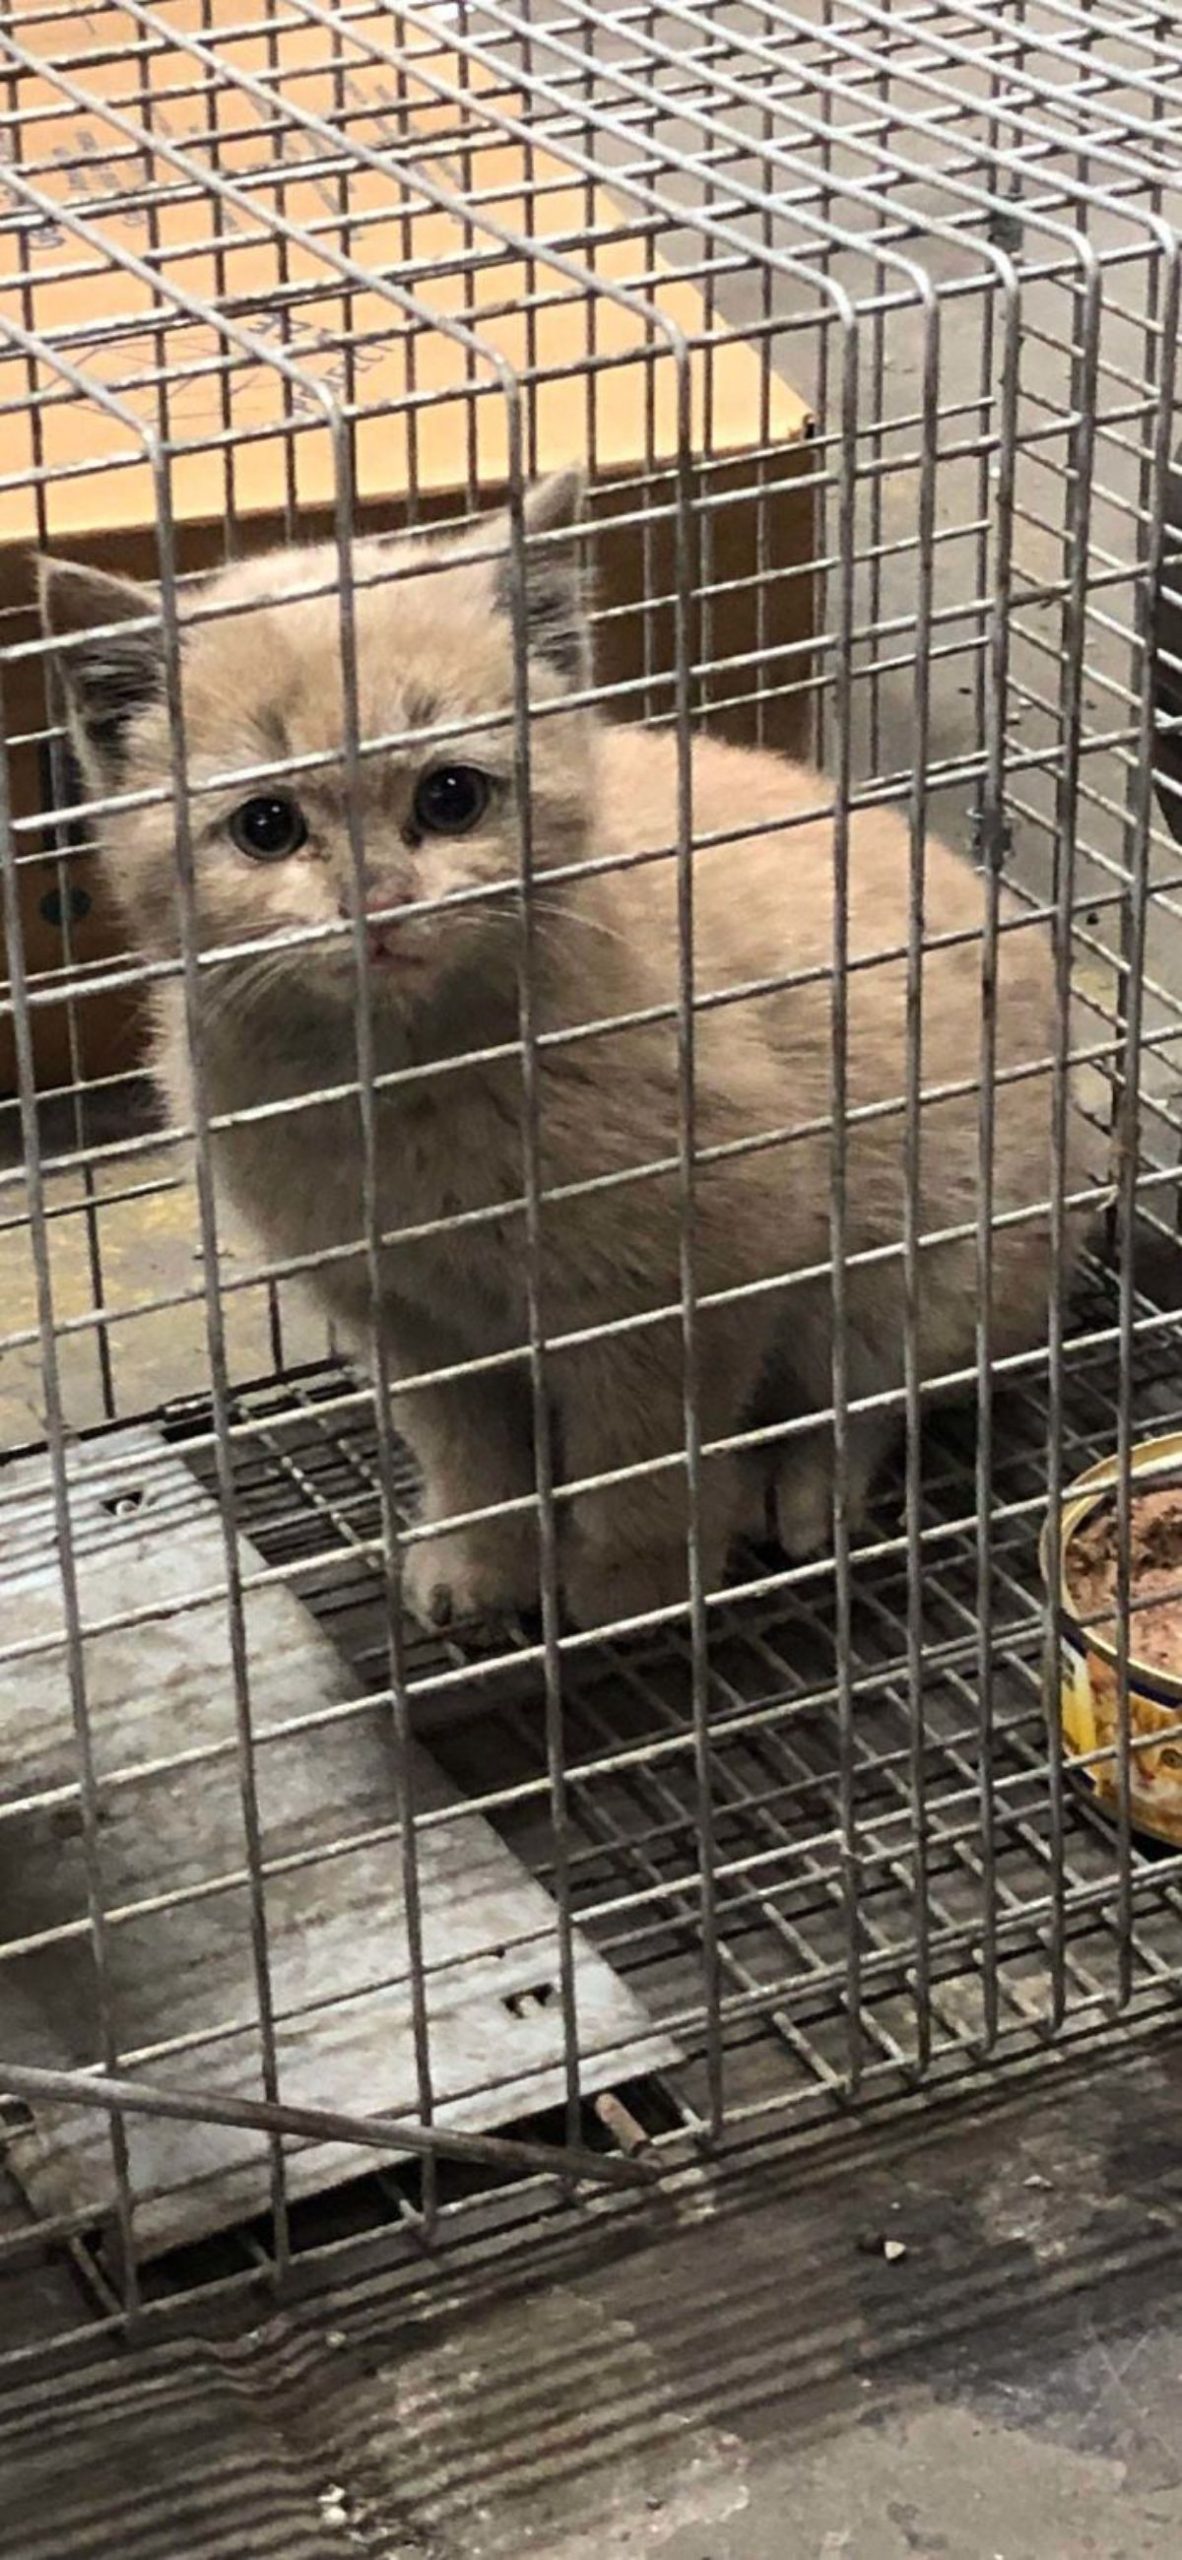 light orange kitten sitting inside a grey metal cage